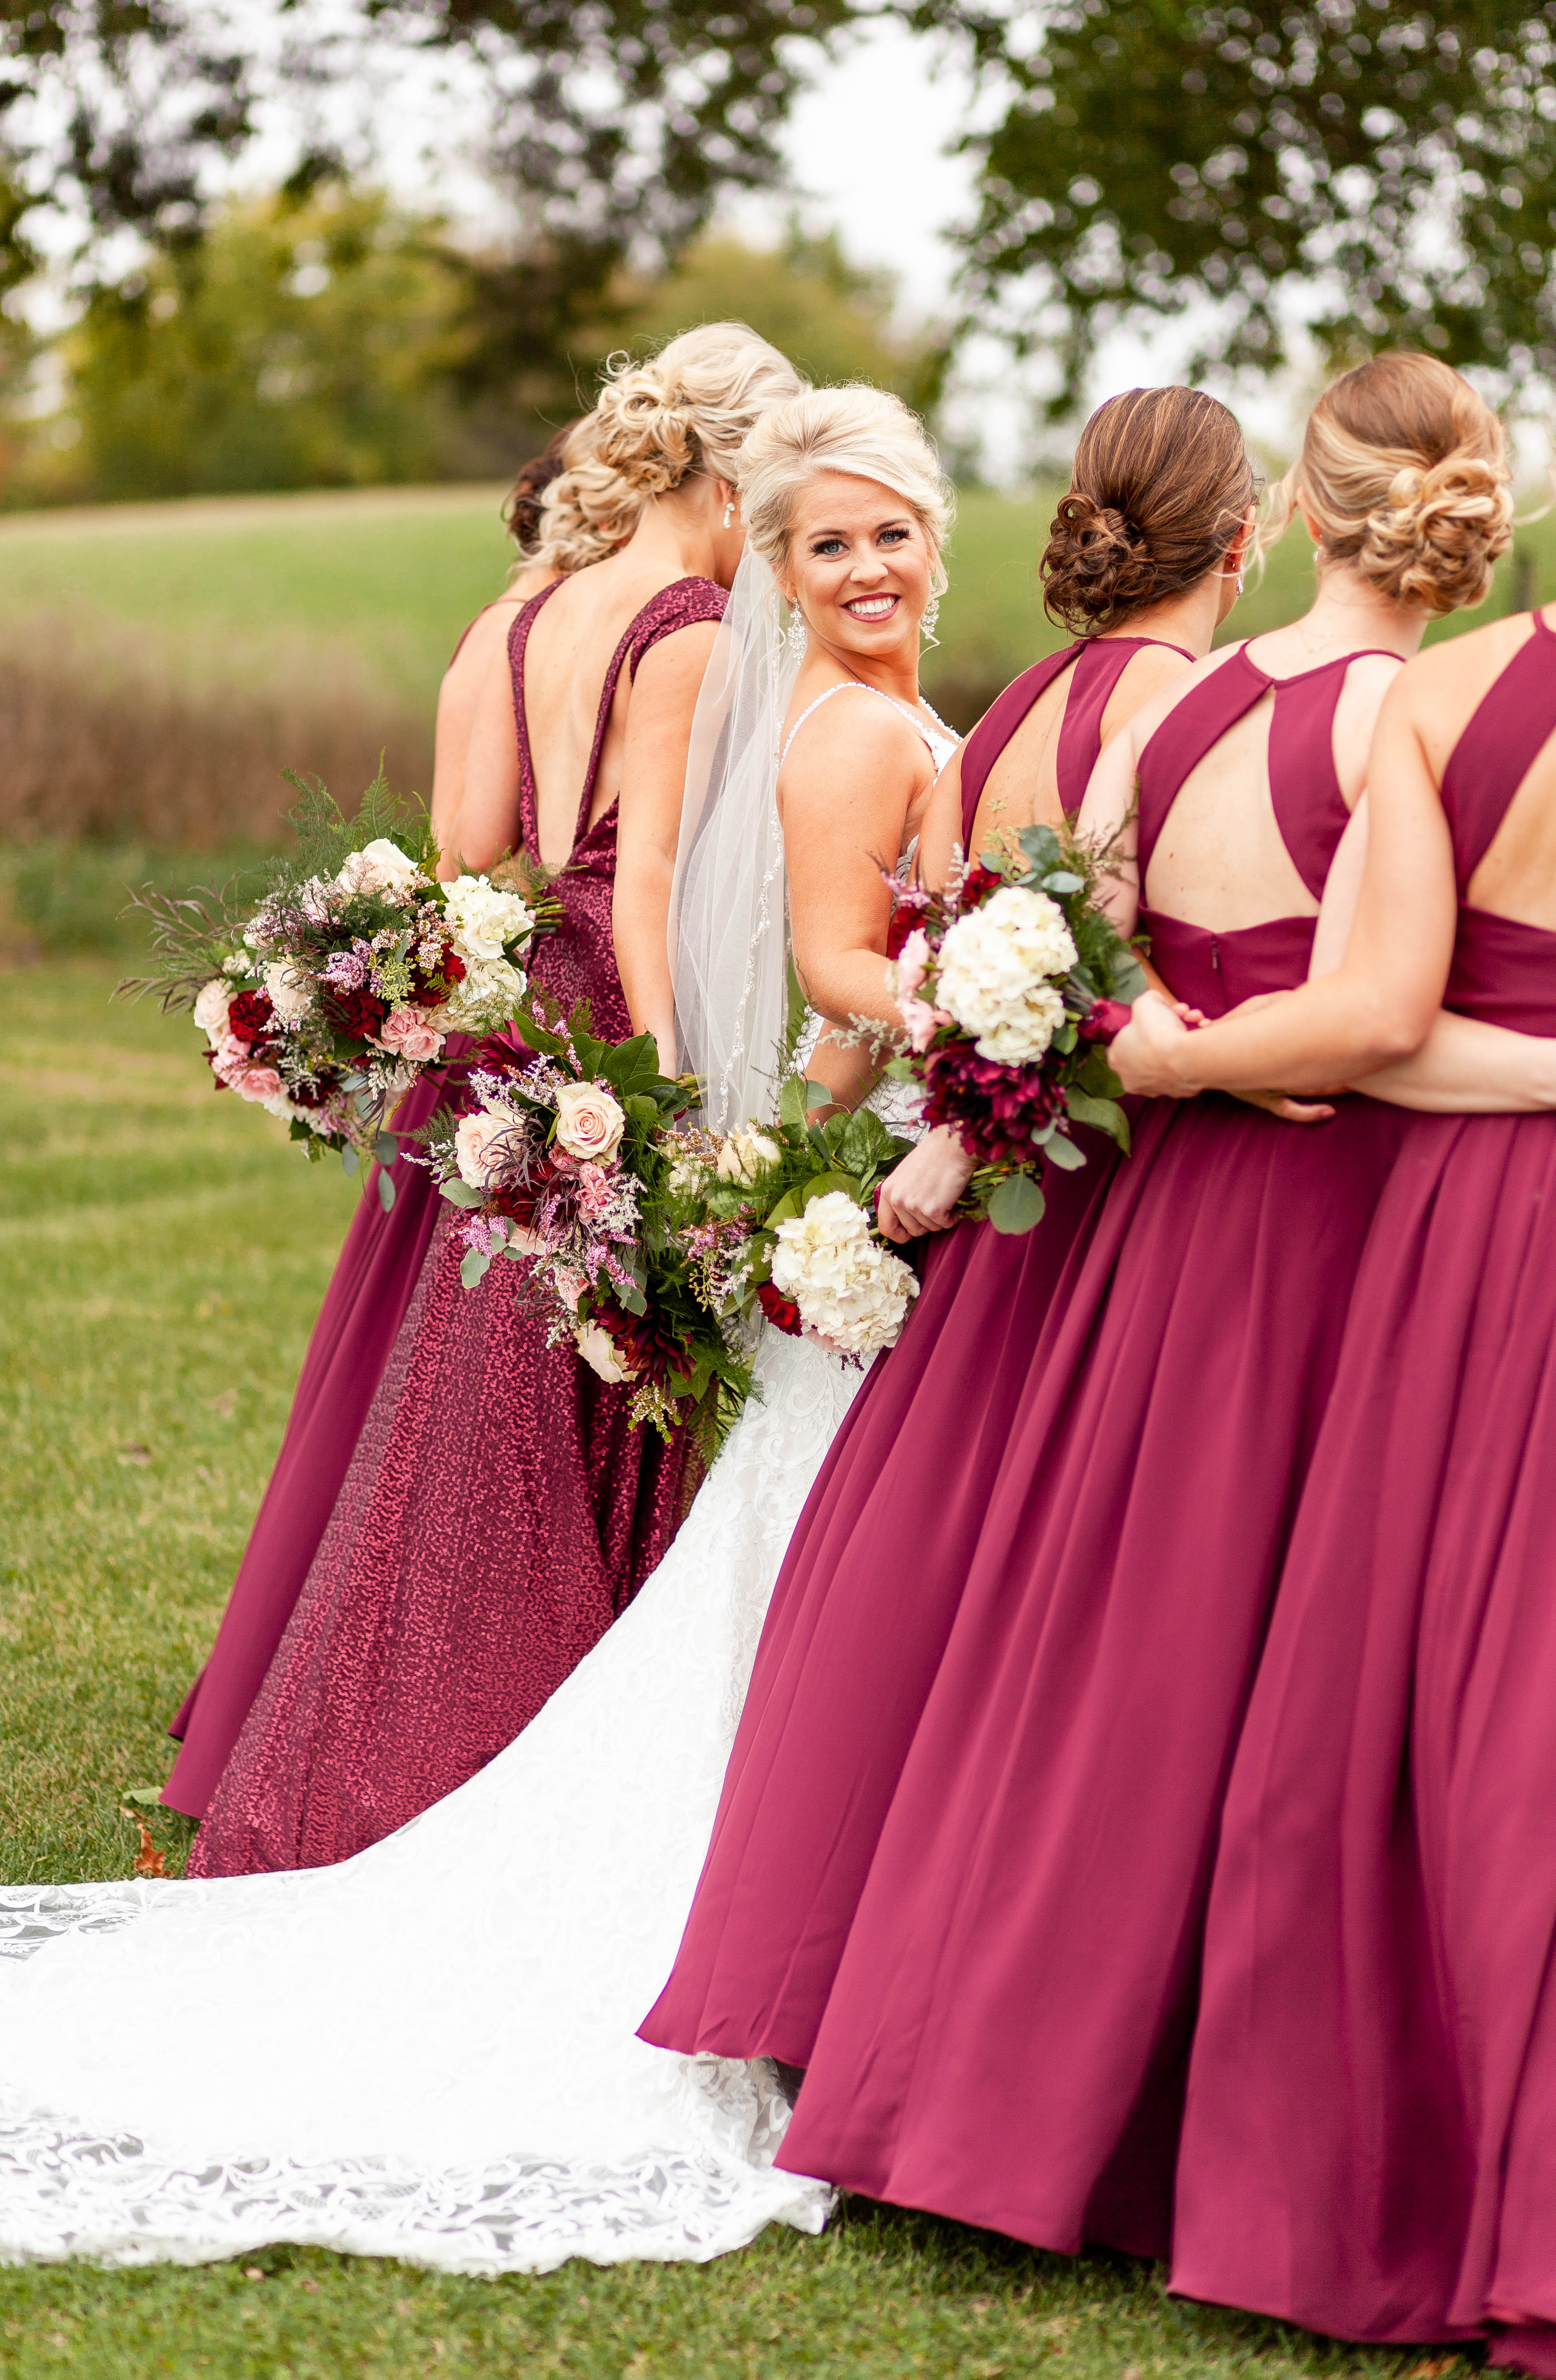 Central-Illinois-Luxury-Wedding-Photographer-Rose-gold-and-blush-pink-wedding